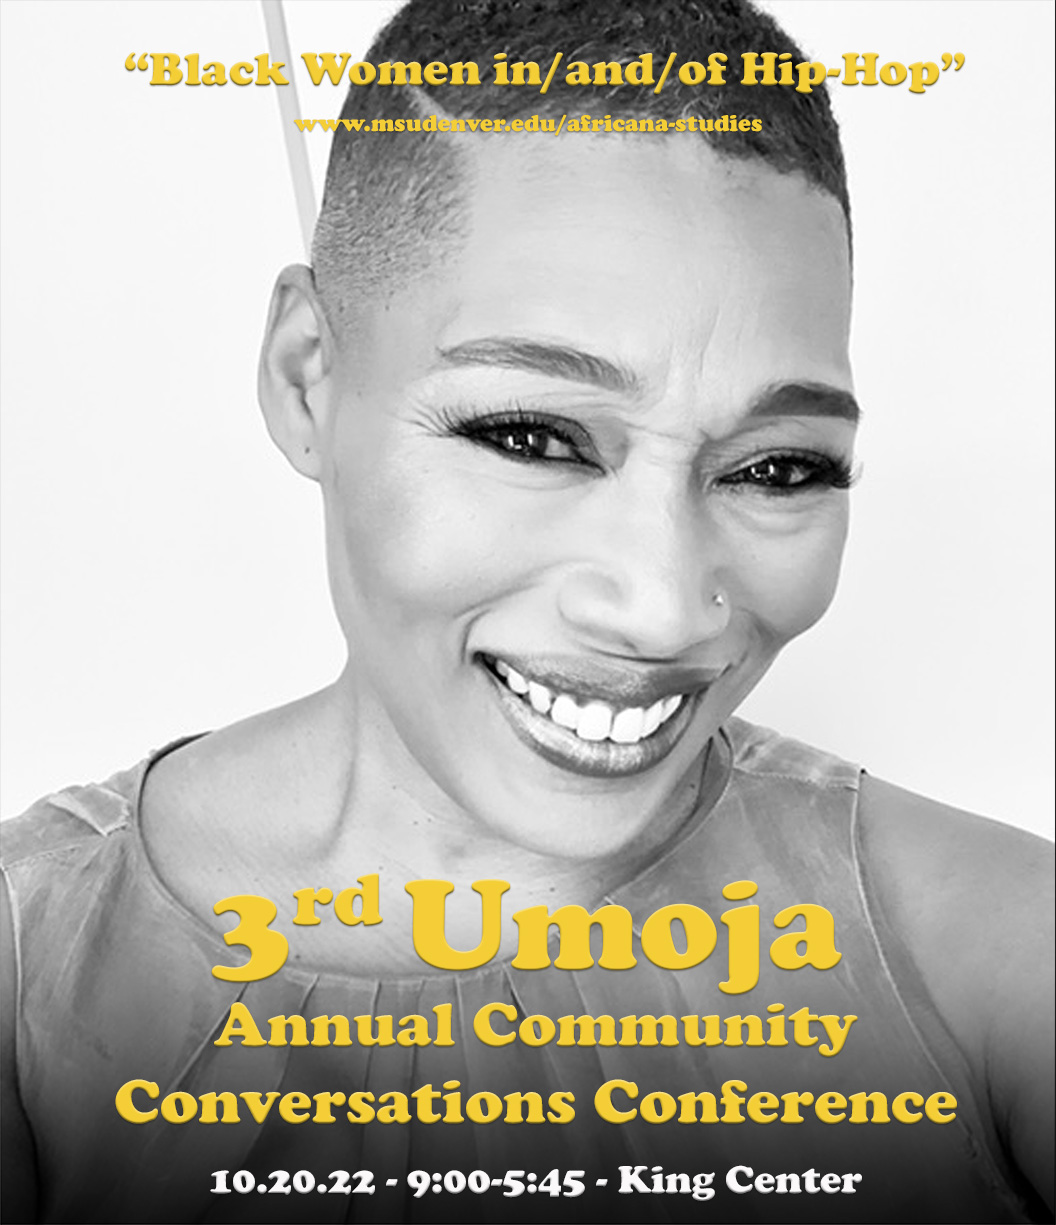 3rd Umoja Community Conversations Conference